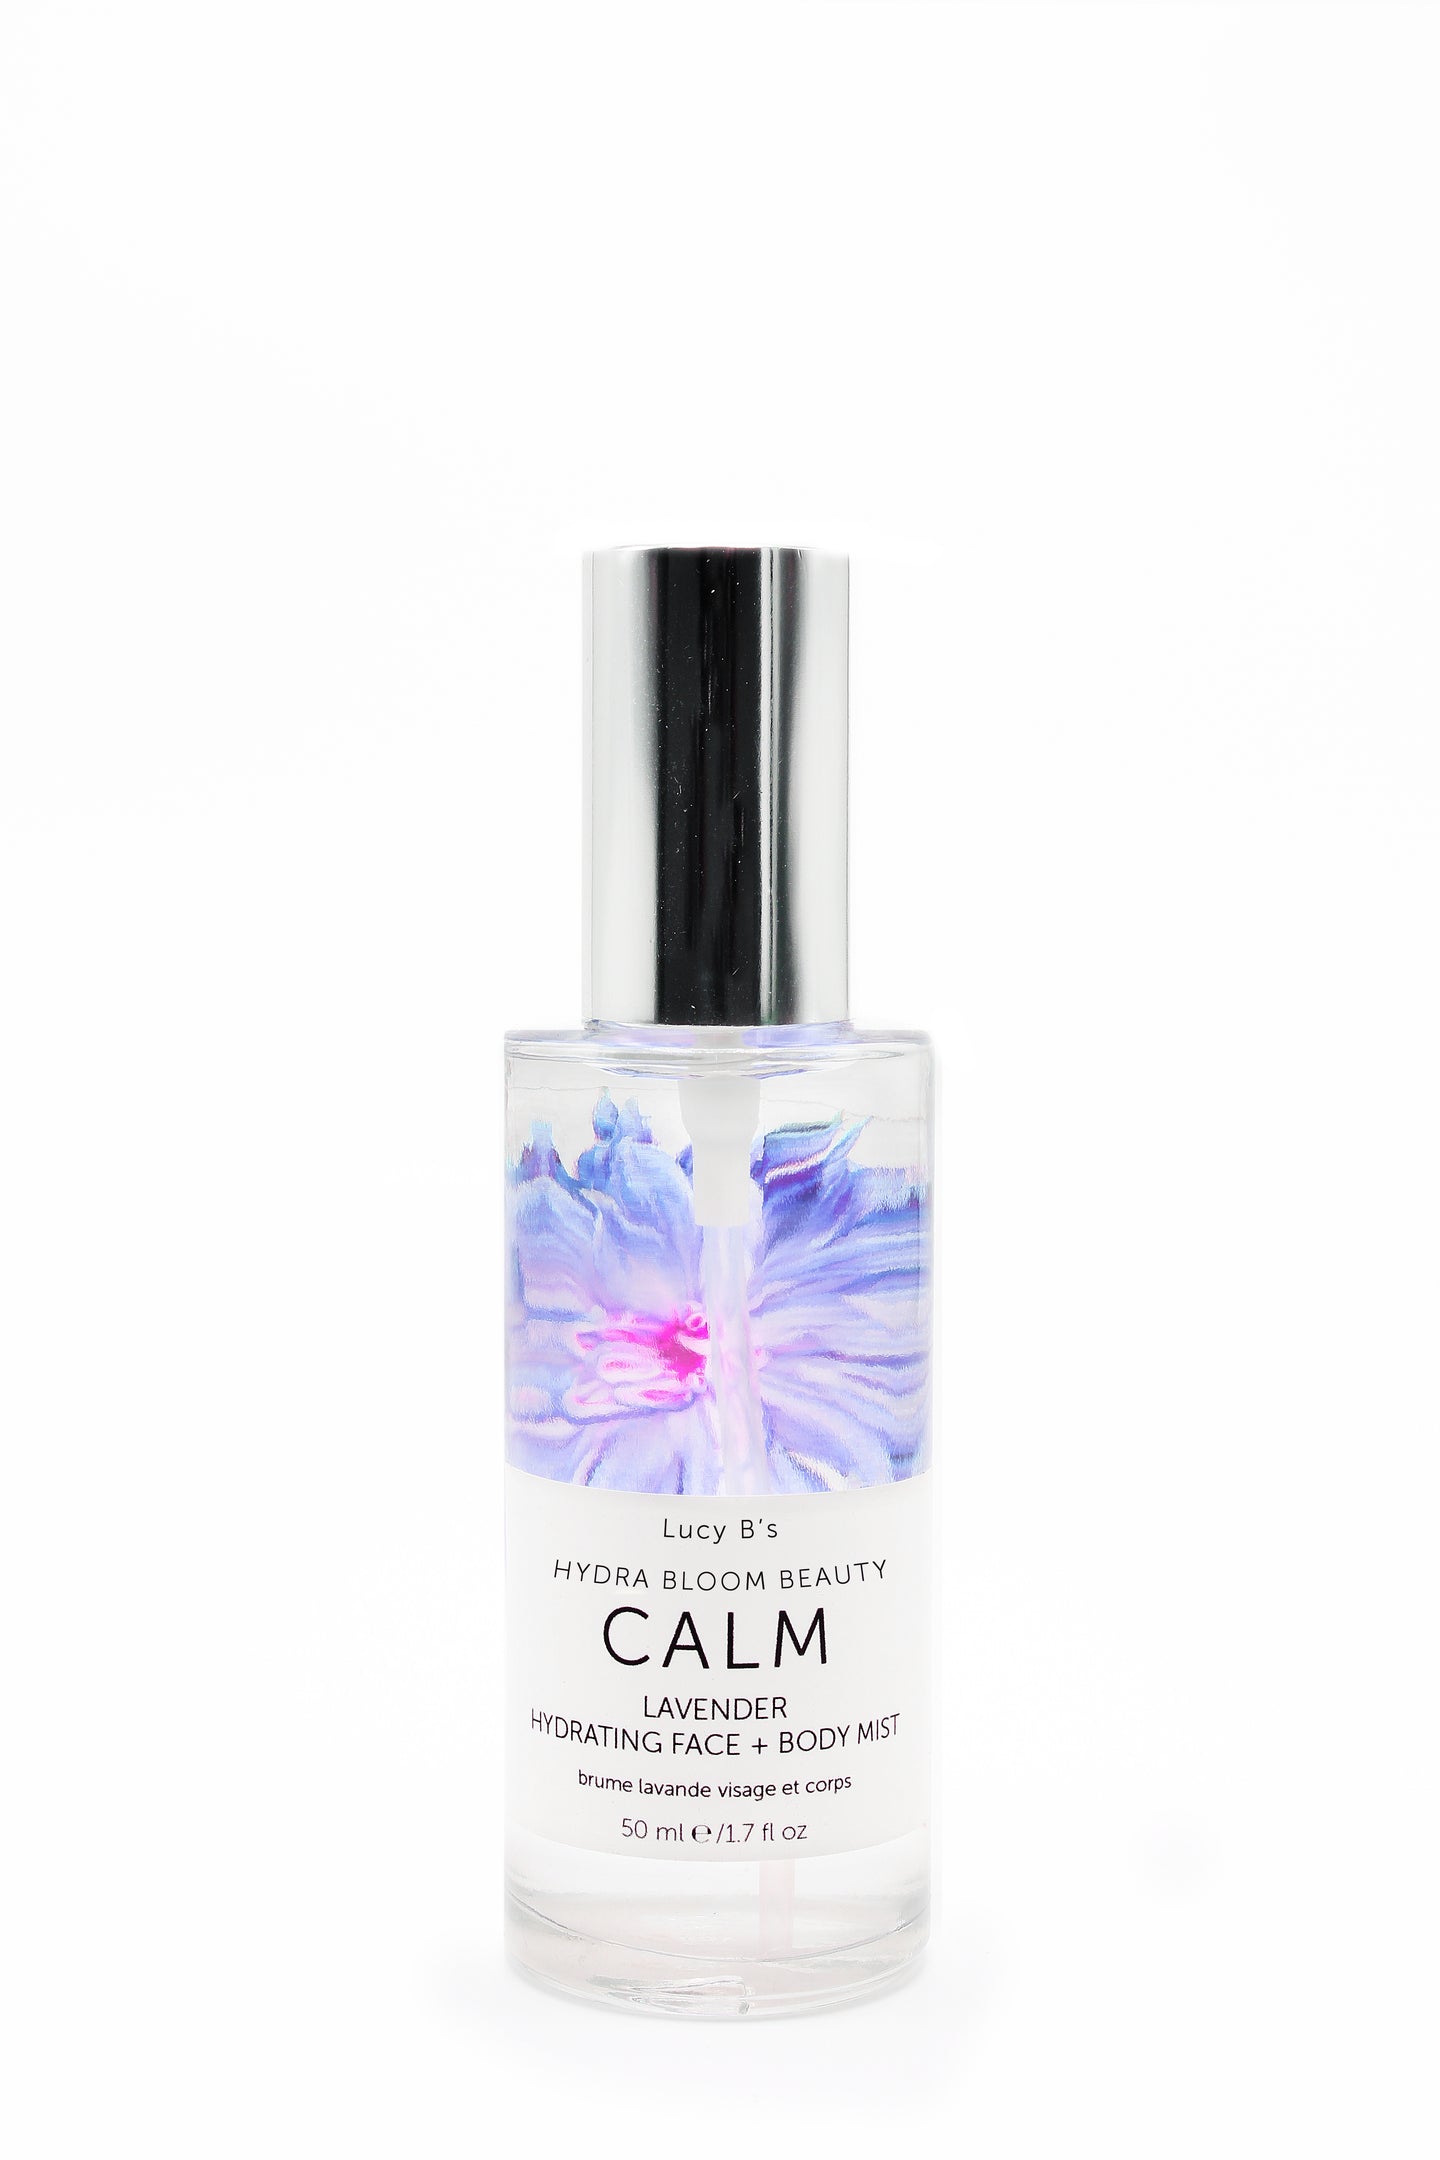 Hydra Bloom Calm Lavender Face and Body Mist - 50ml |  Hydra Bloom